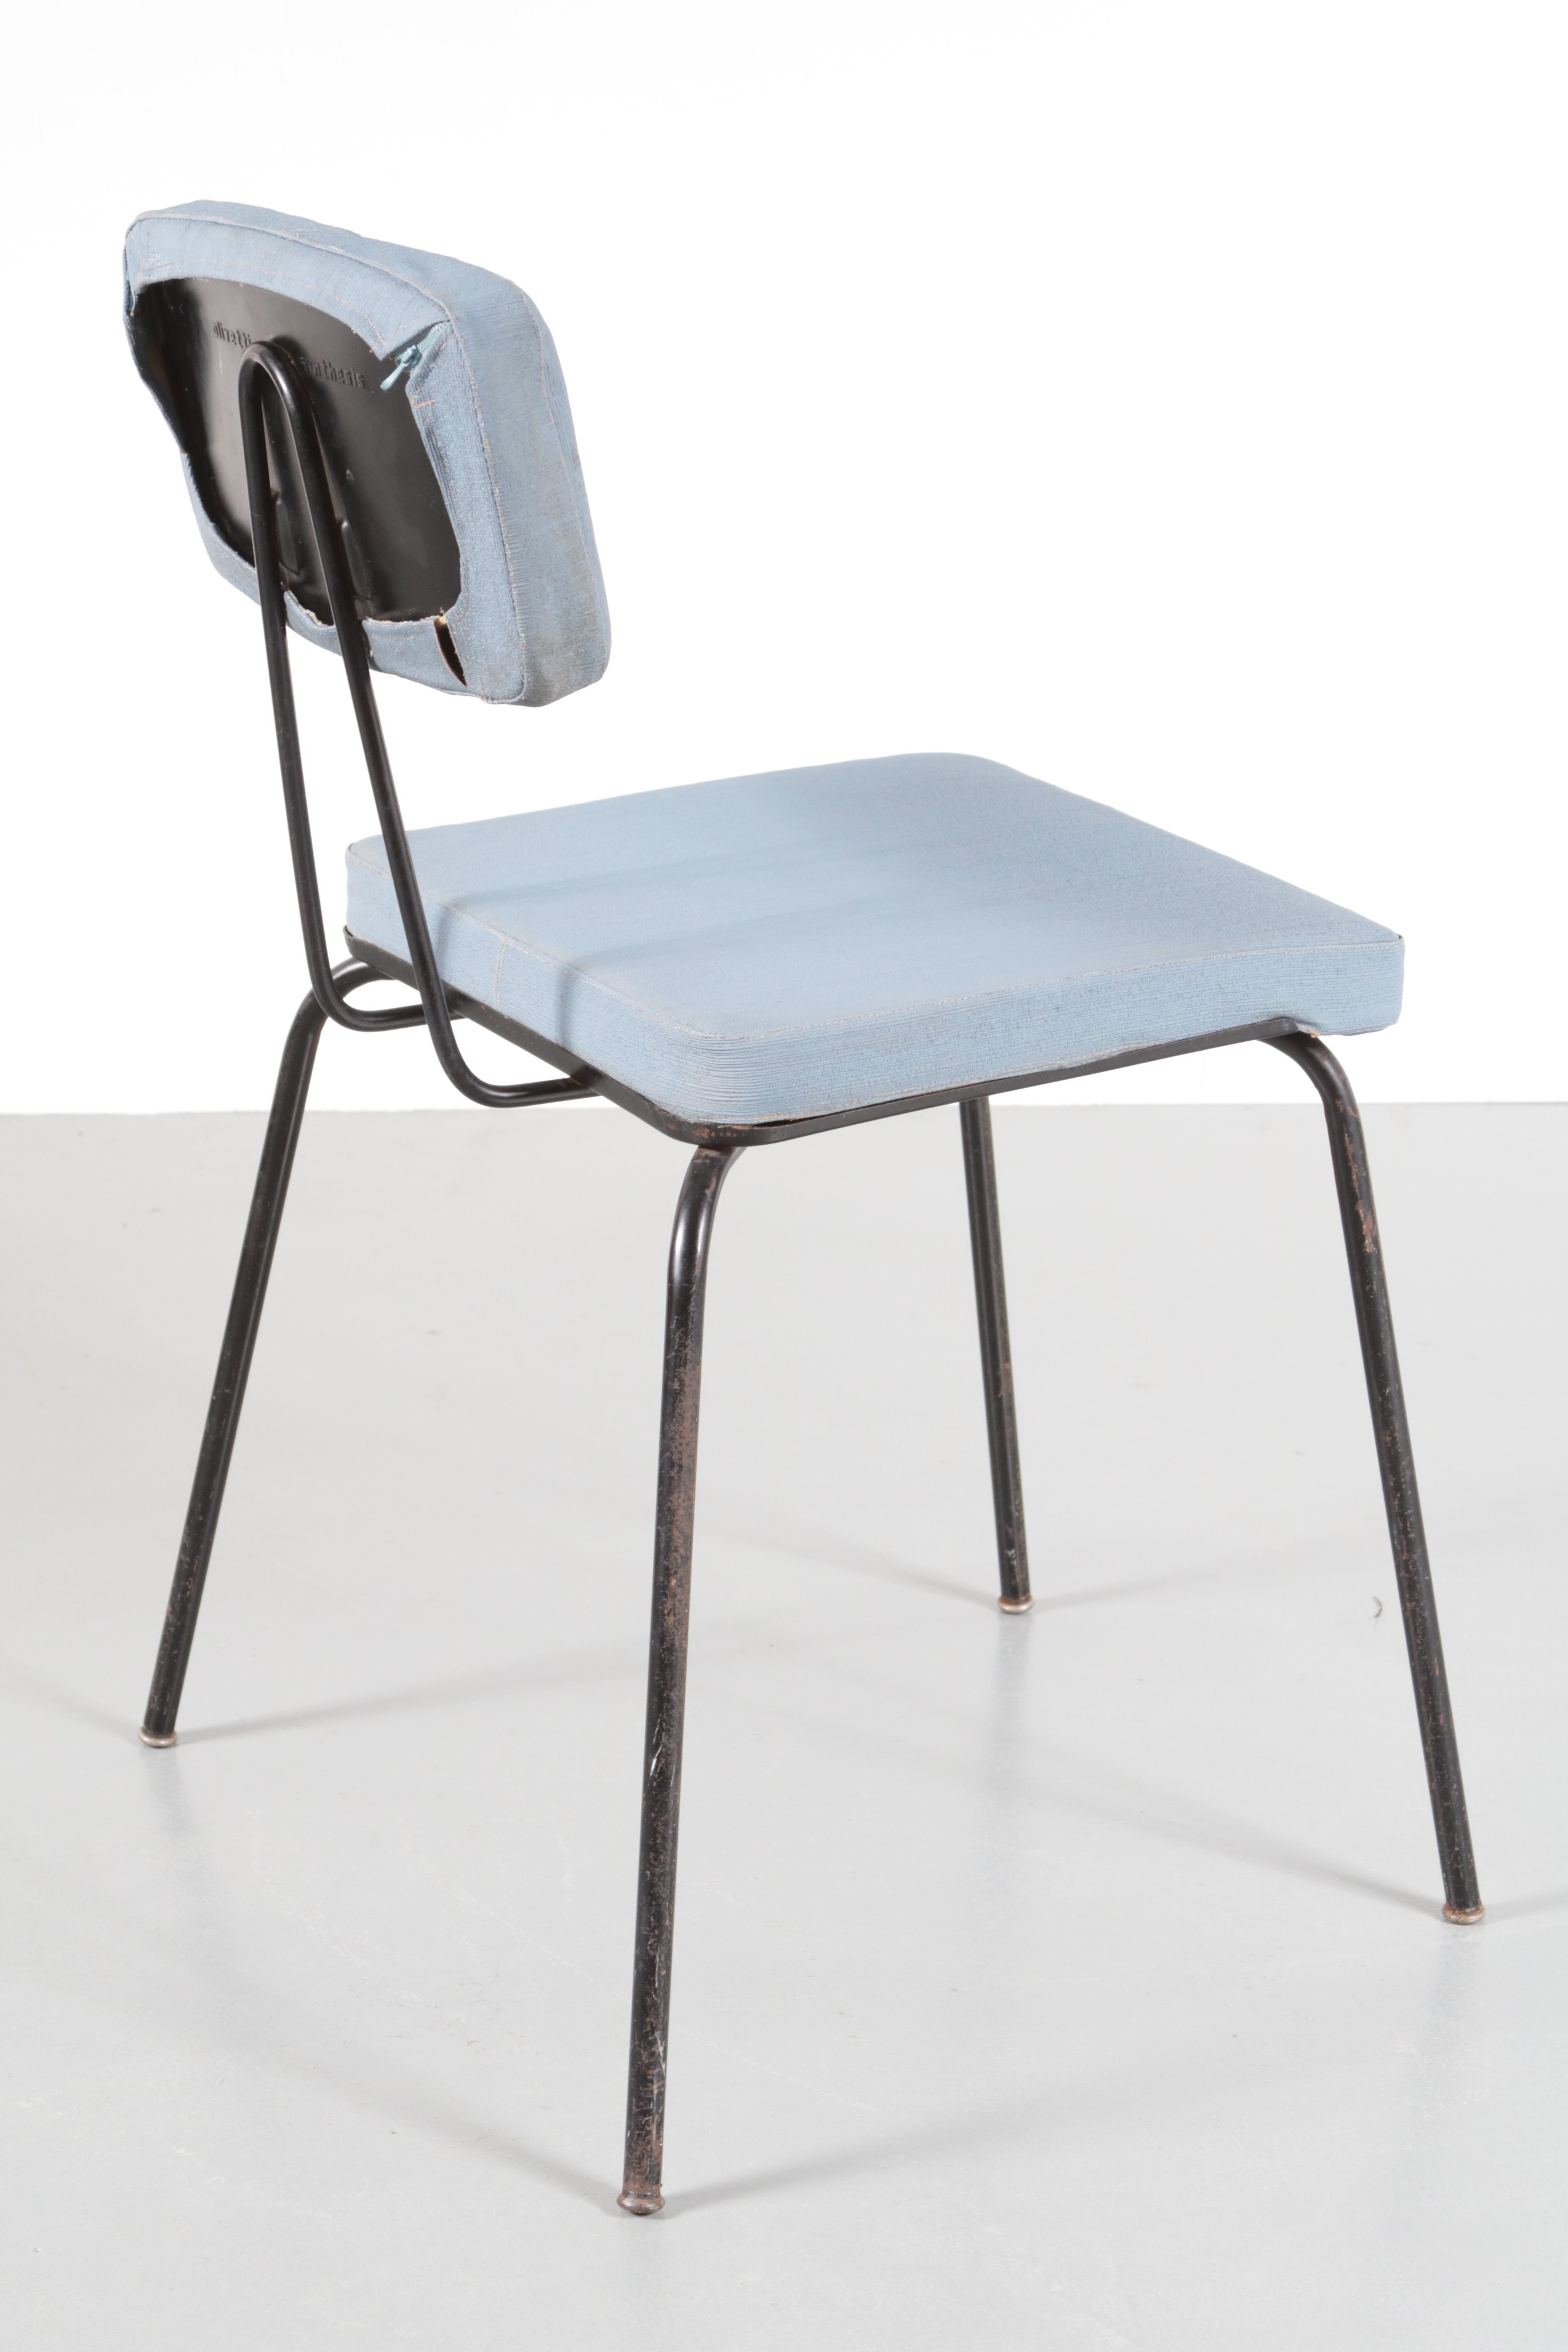 iMinimalist desk chairi by Studio BBPR 1960s Design Market